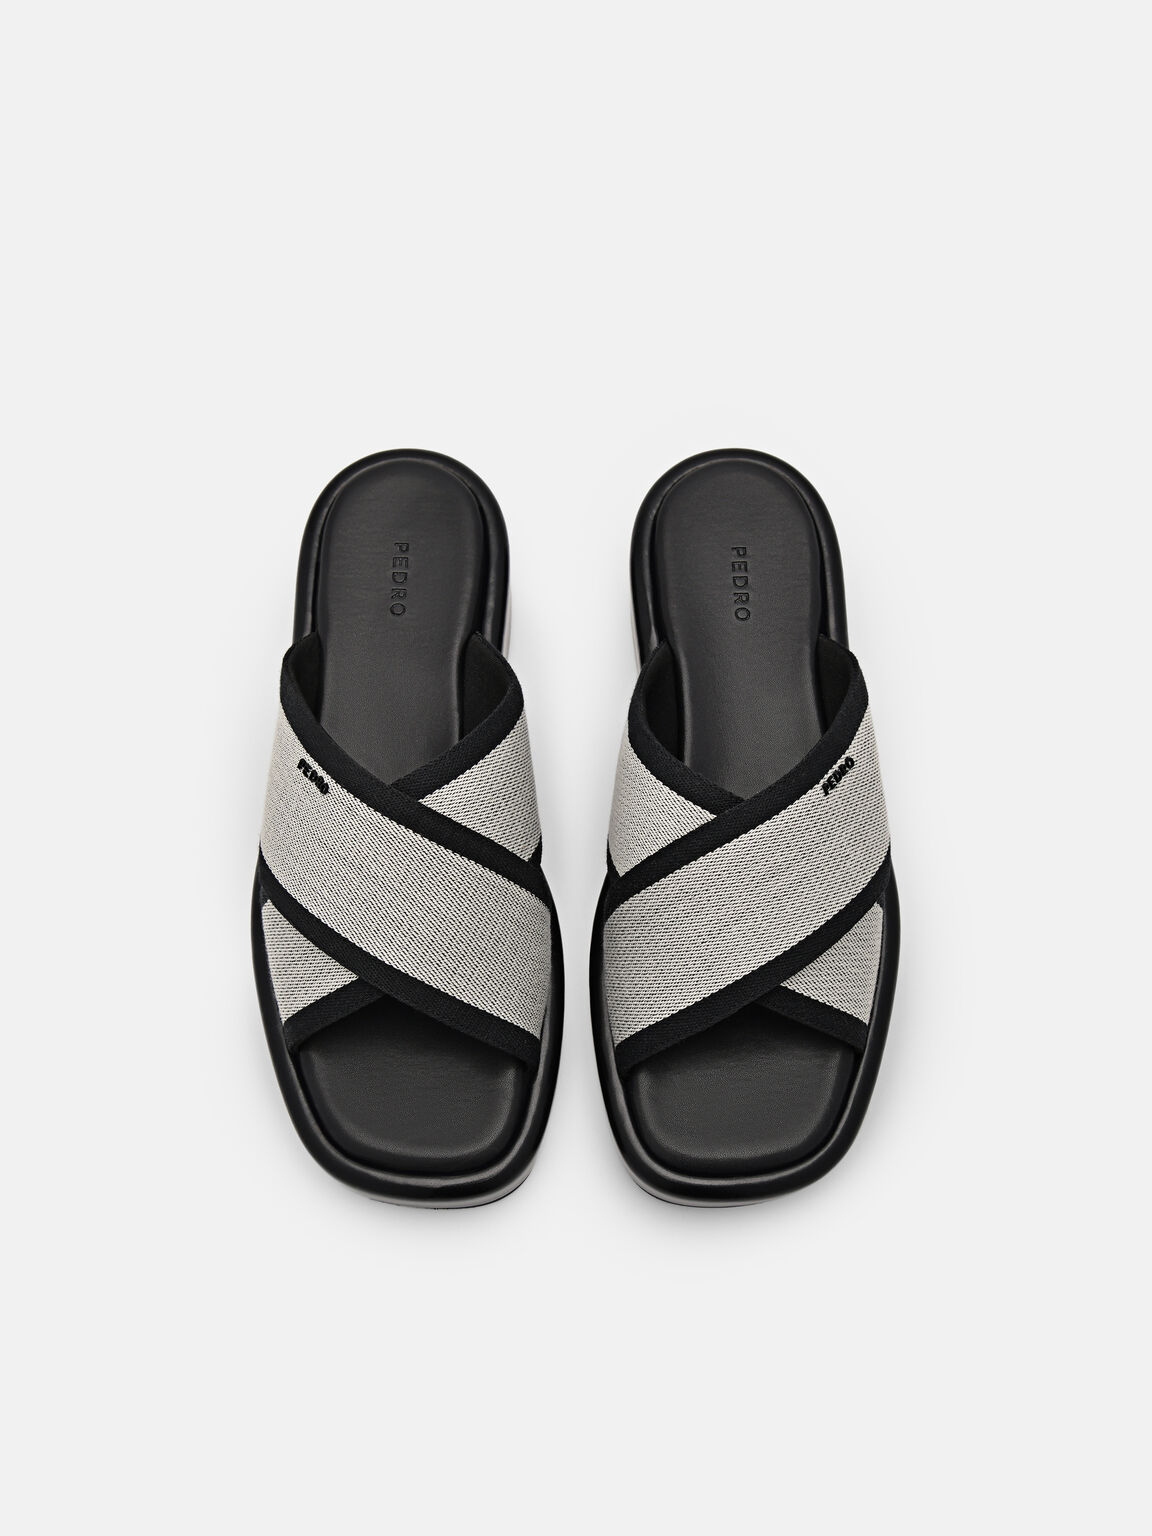 Izzie Wedge Sandals, Black, hi-res